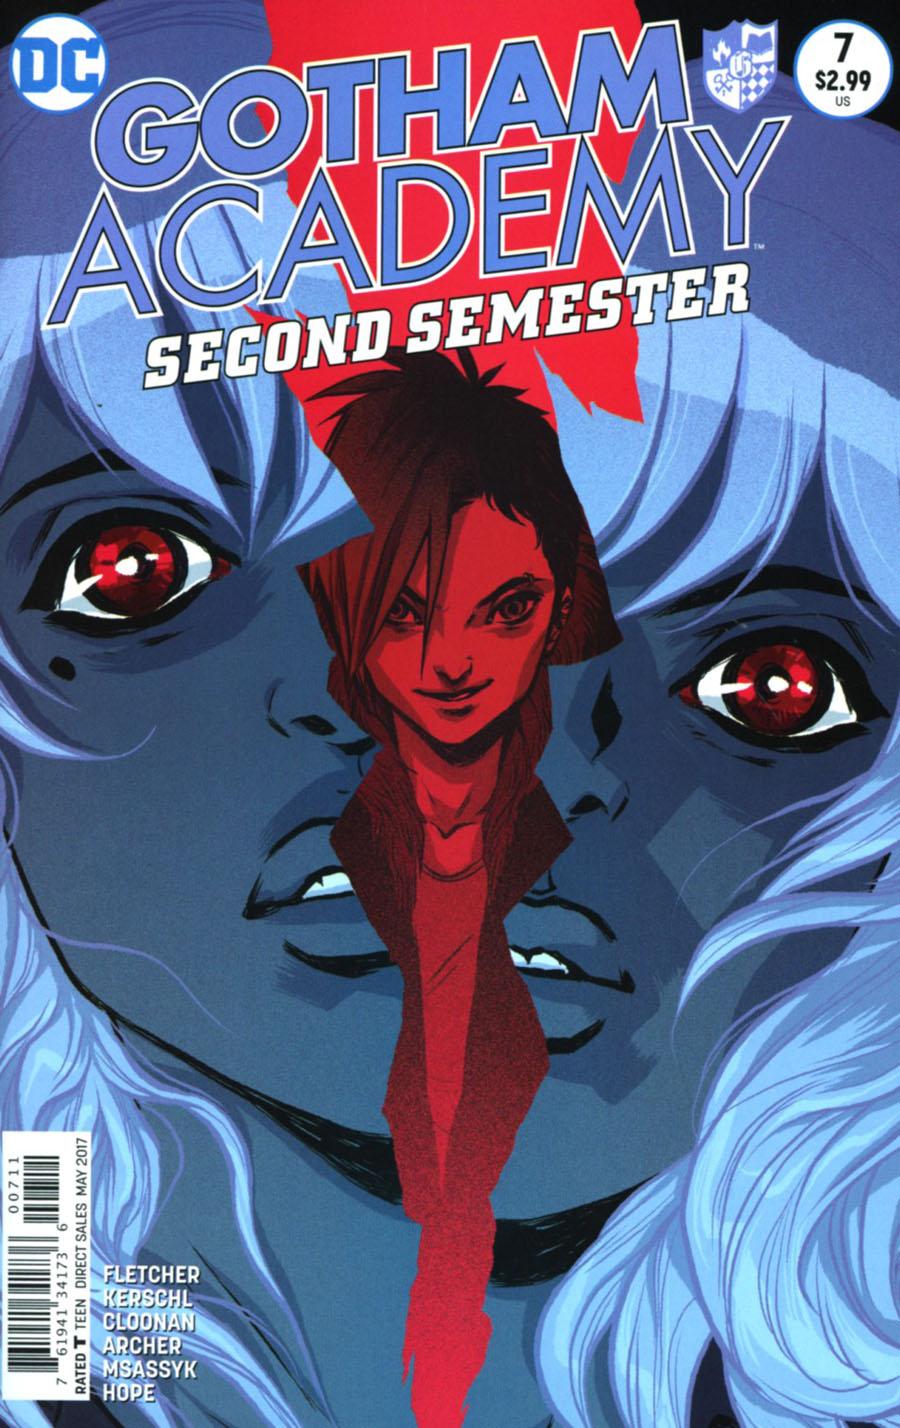 Gotham Academy Second Semester Vol. 1 #7